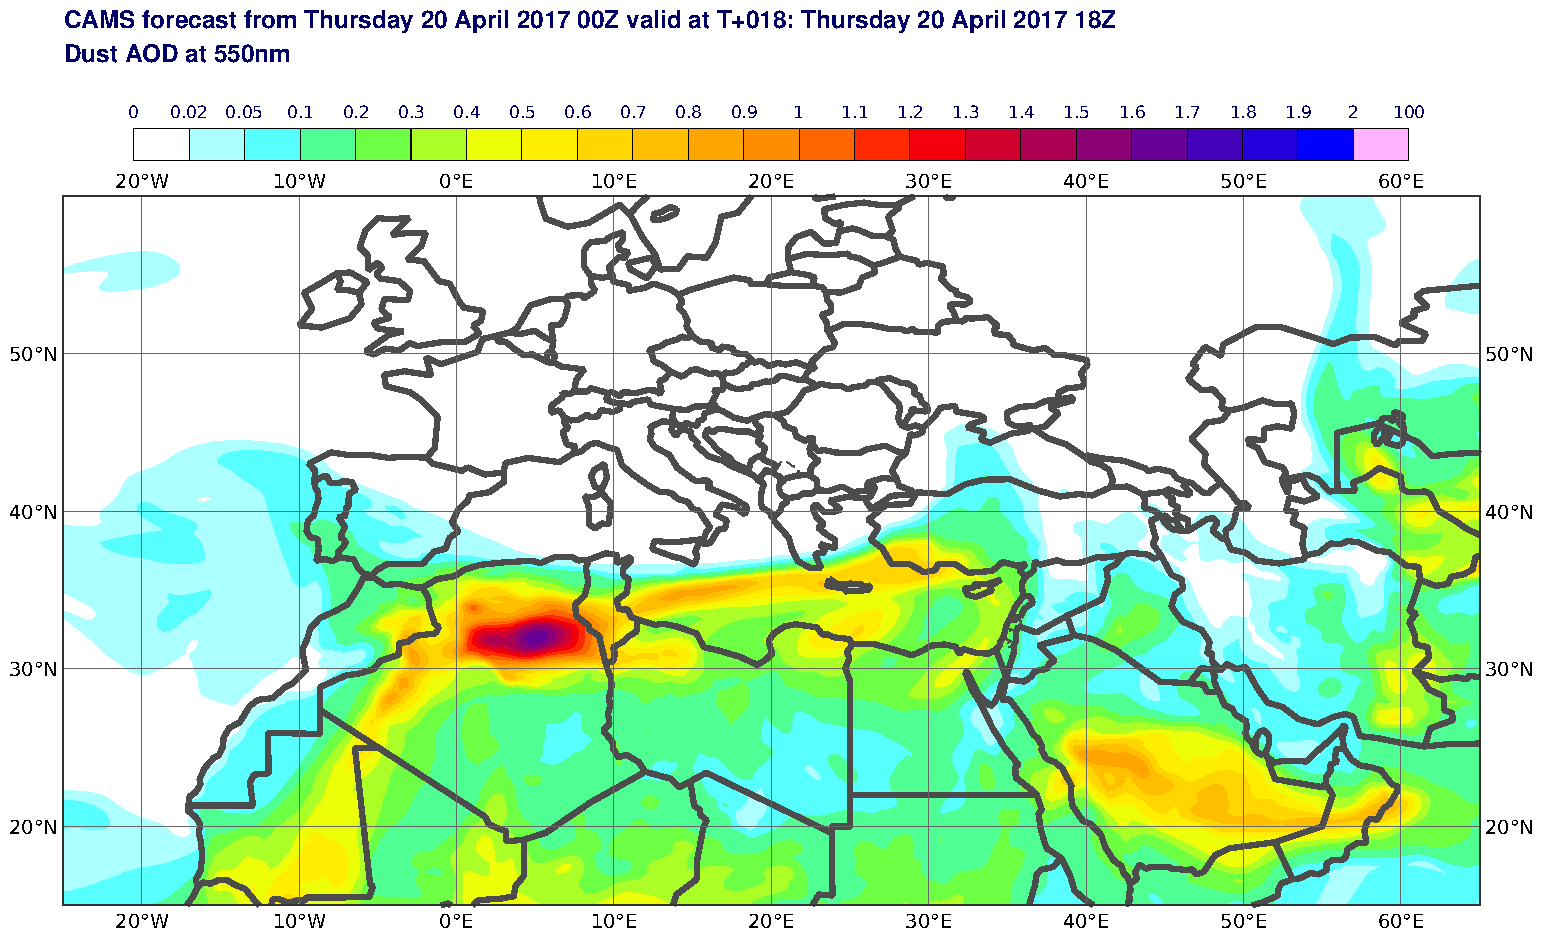 Dust AOD at 550nm valid at T18 - 2017-04-20 18:00